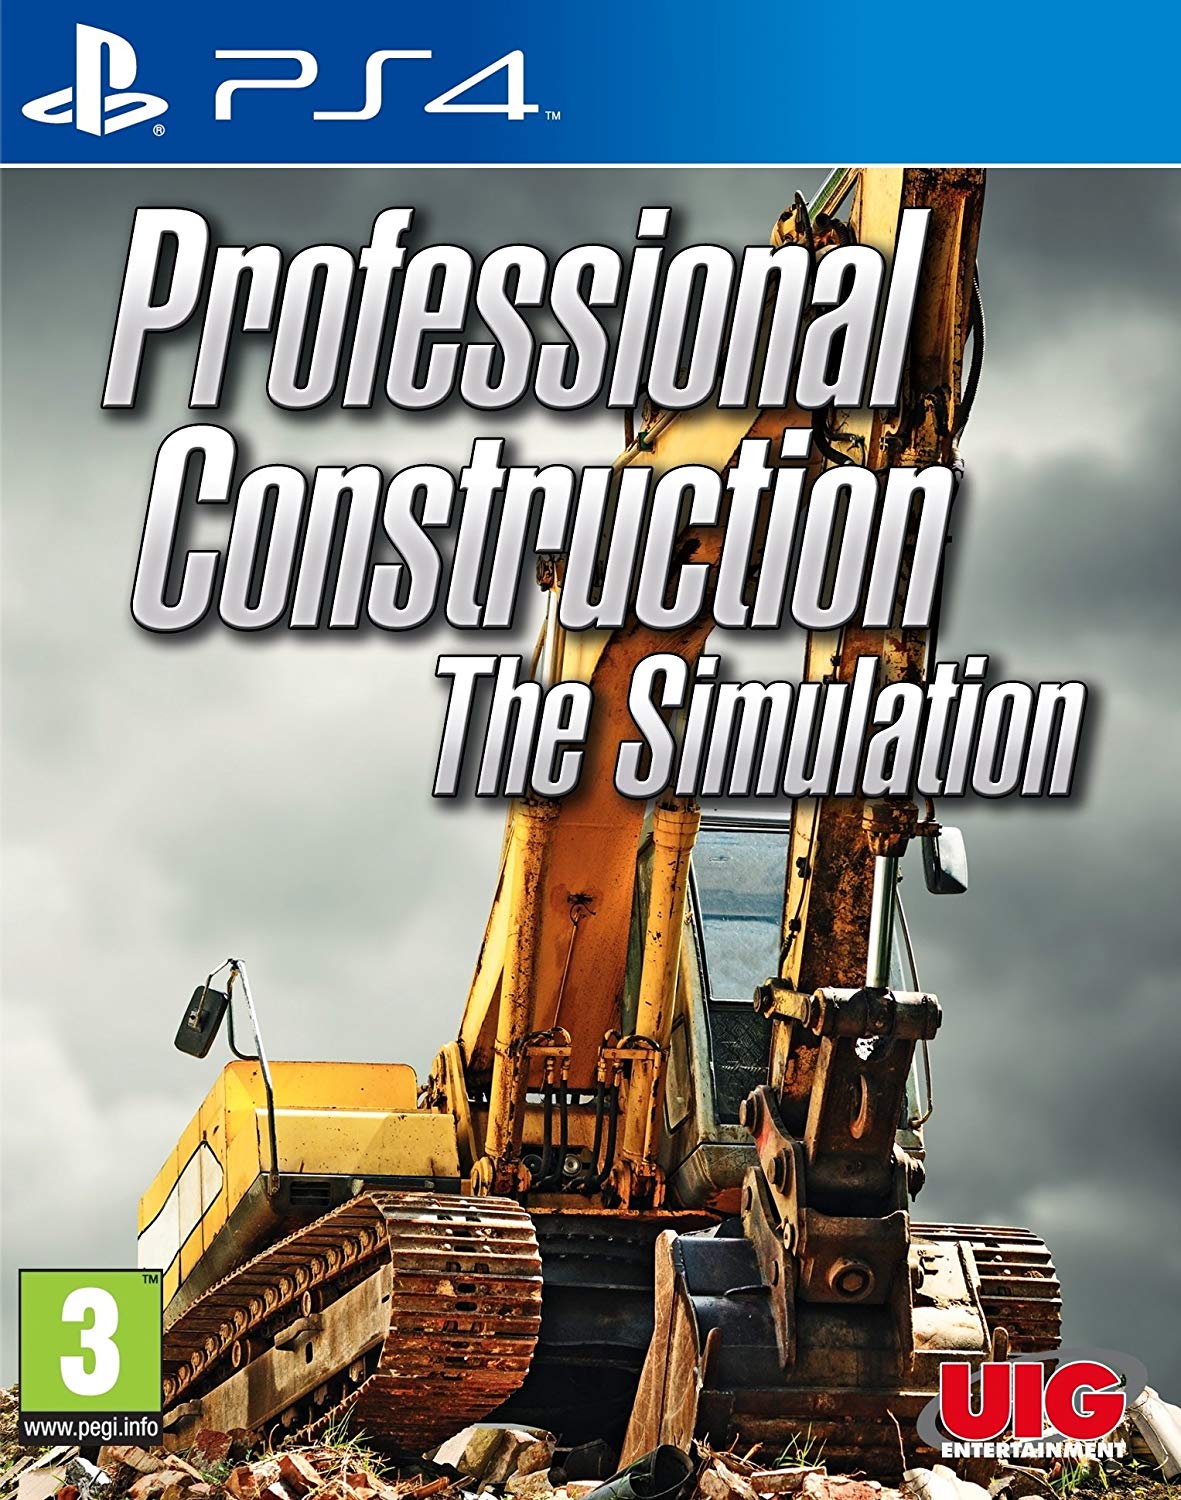 Professional Construction The Simulation (Baumaschinen)